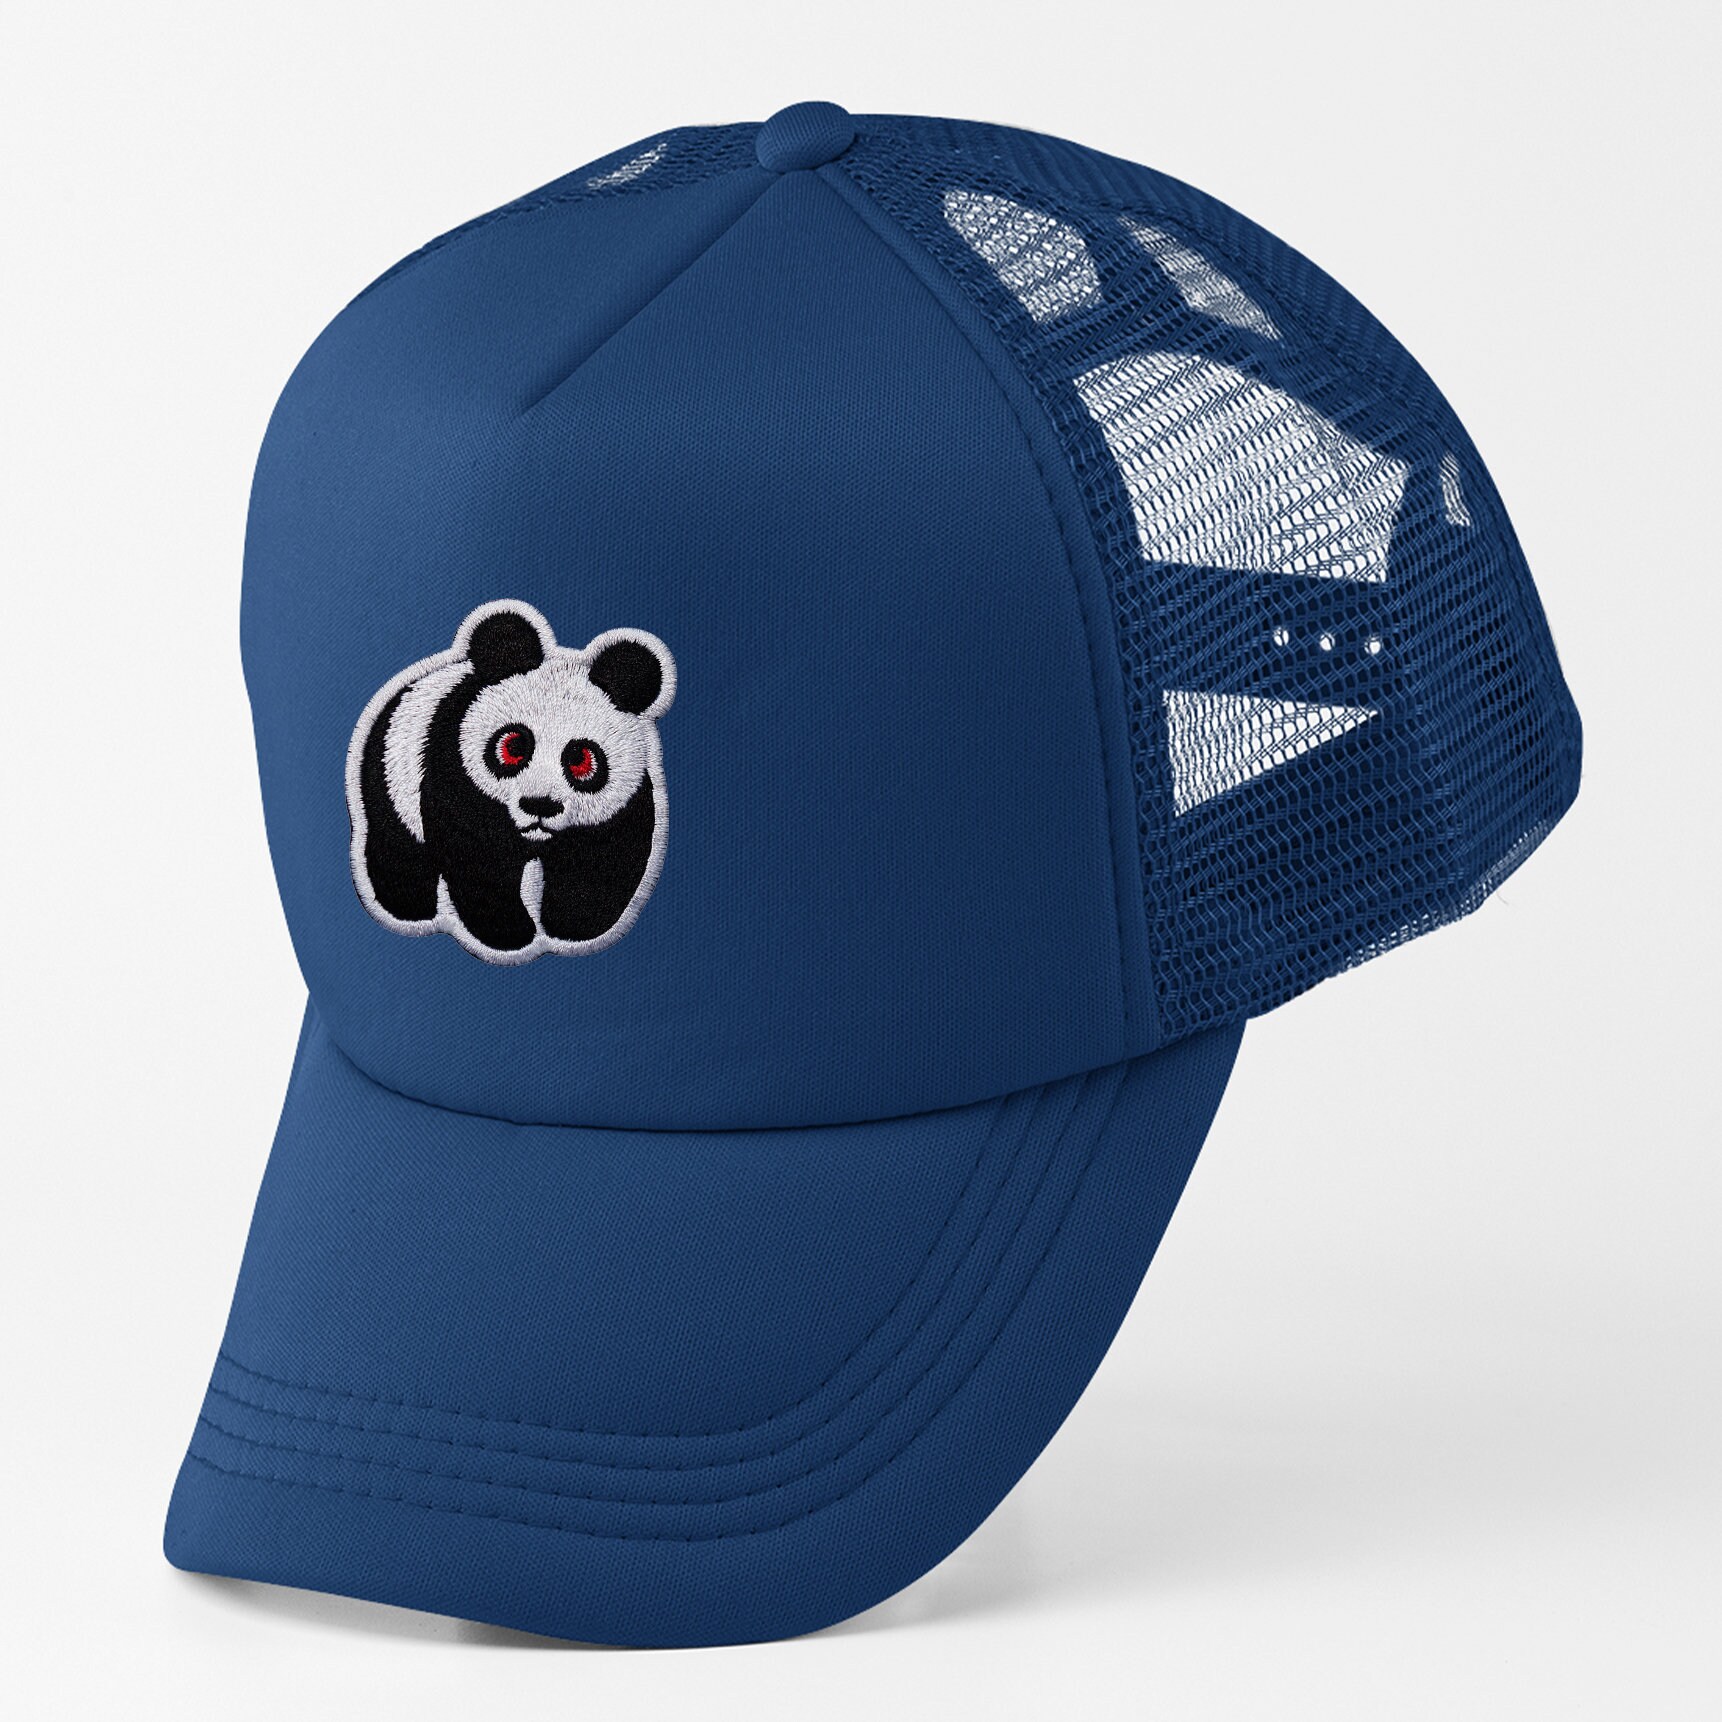 Stylish Panda Trucker Cap - Modern & Breathable